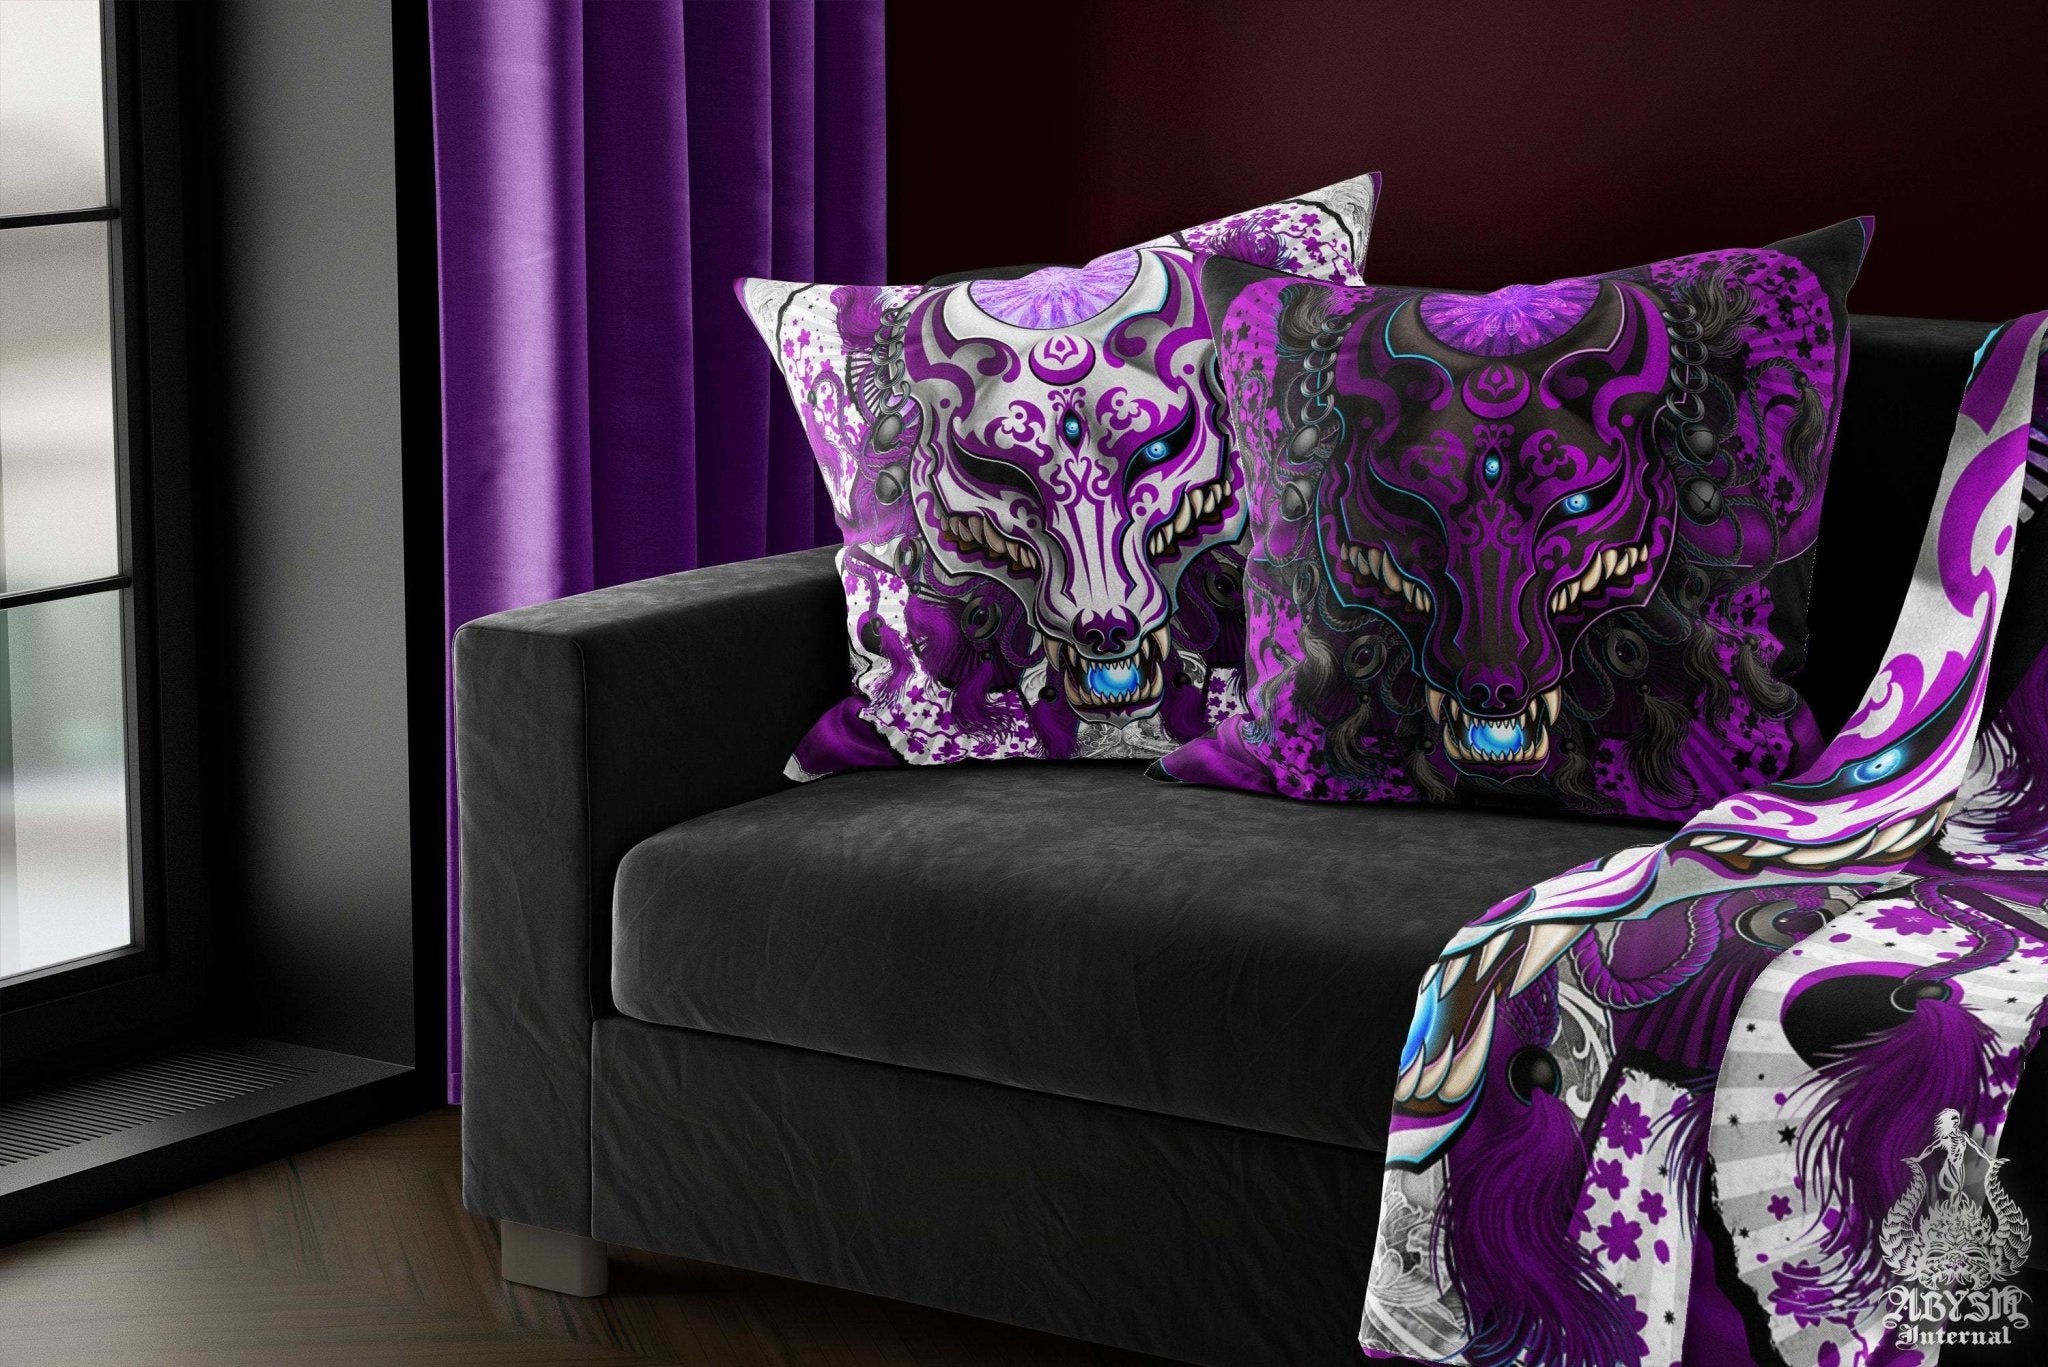 Pastel Goth Throw Pillow, Decorative Accent Cushion, Japanese Kitsune Mask, Anime and Gamer Room Decor, Okami, Alternative Home - White & Purple - Abysm Internal